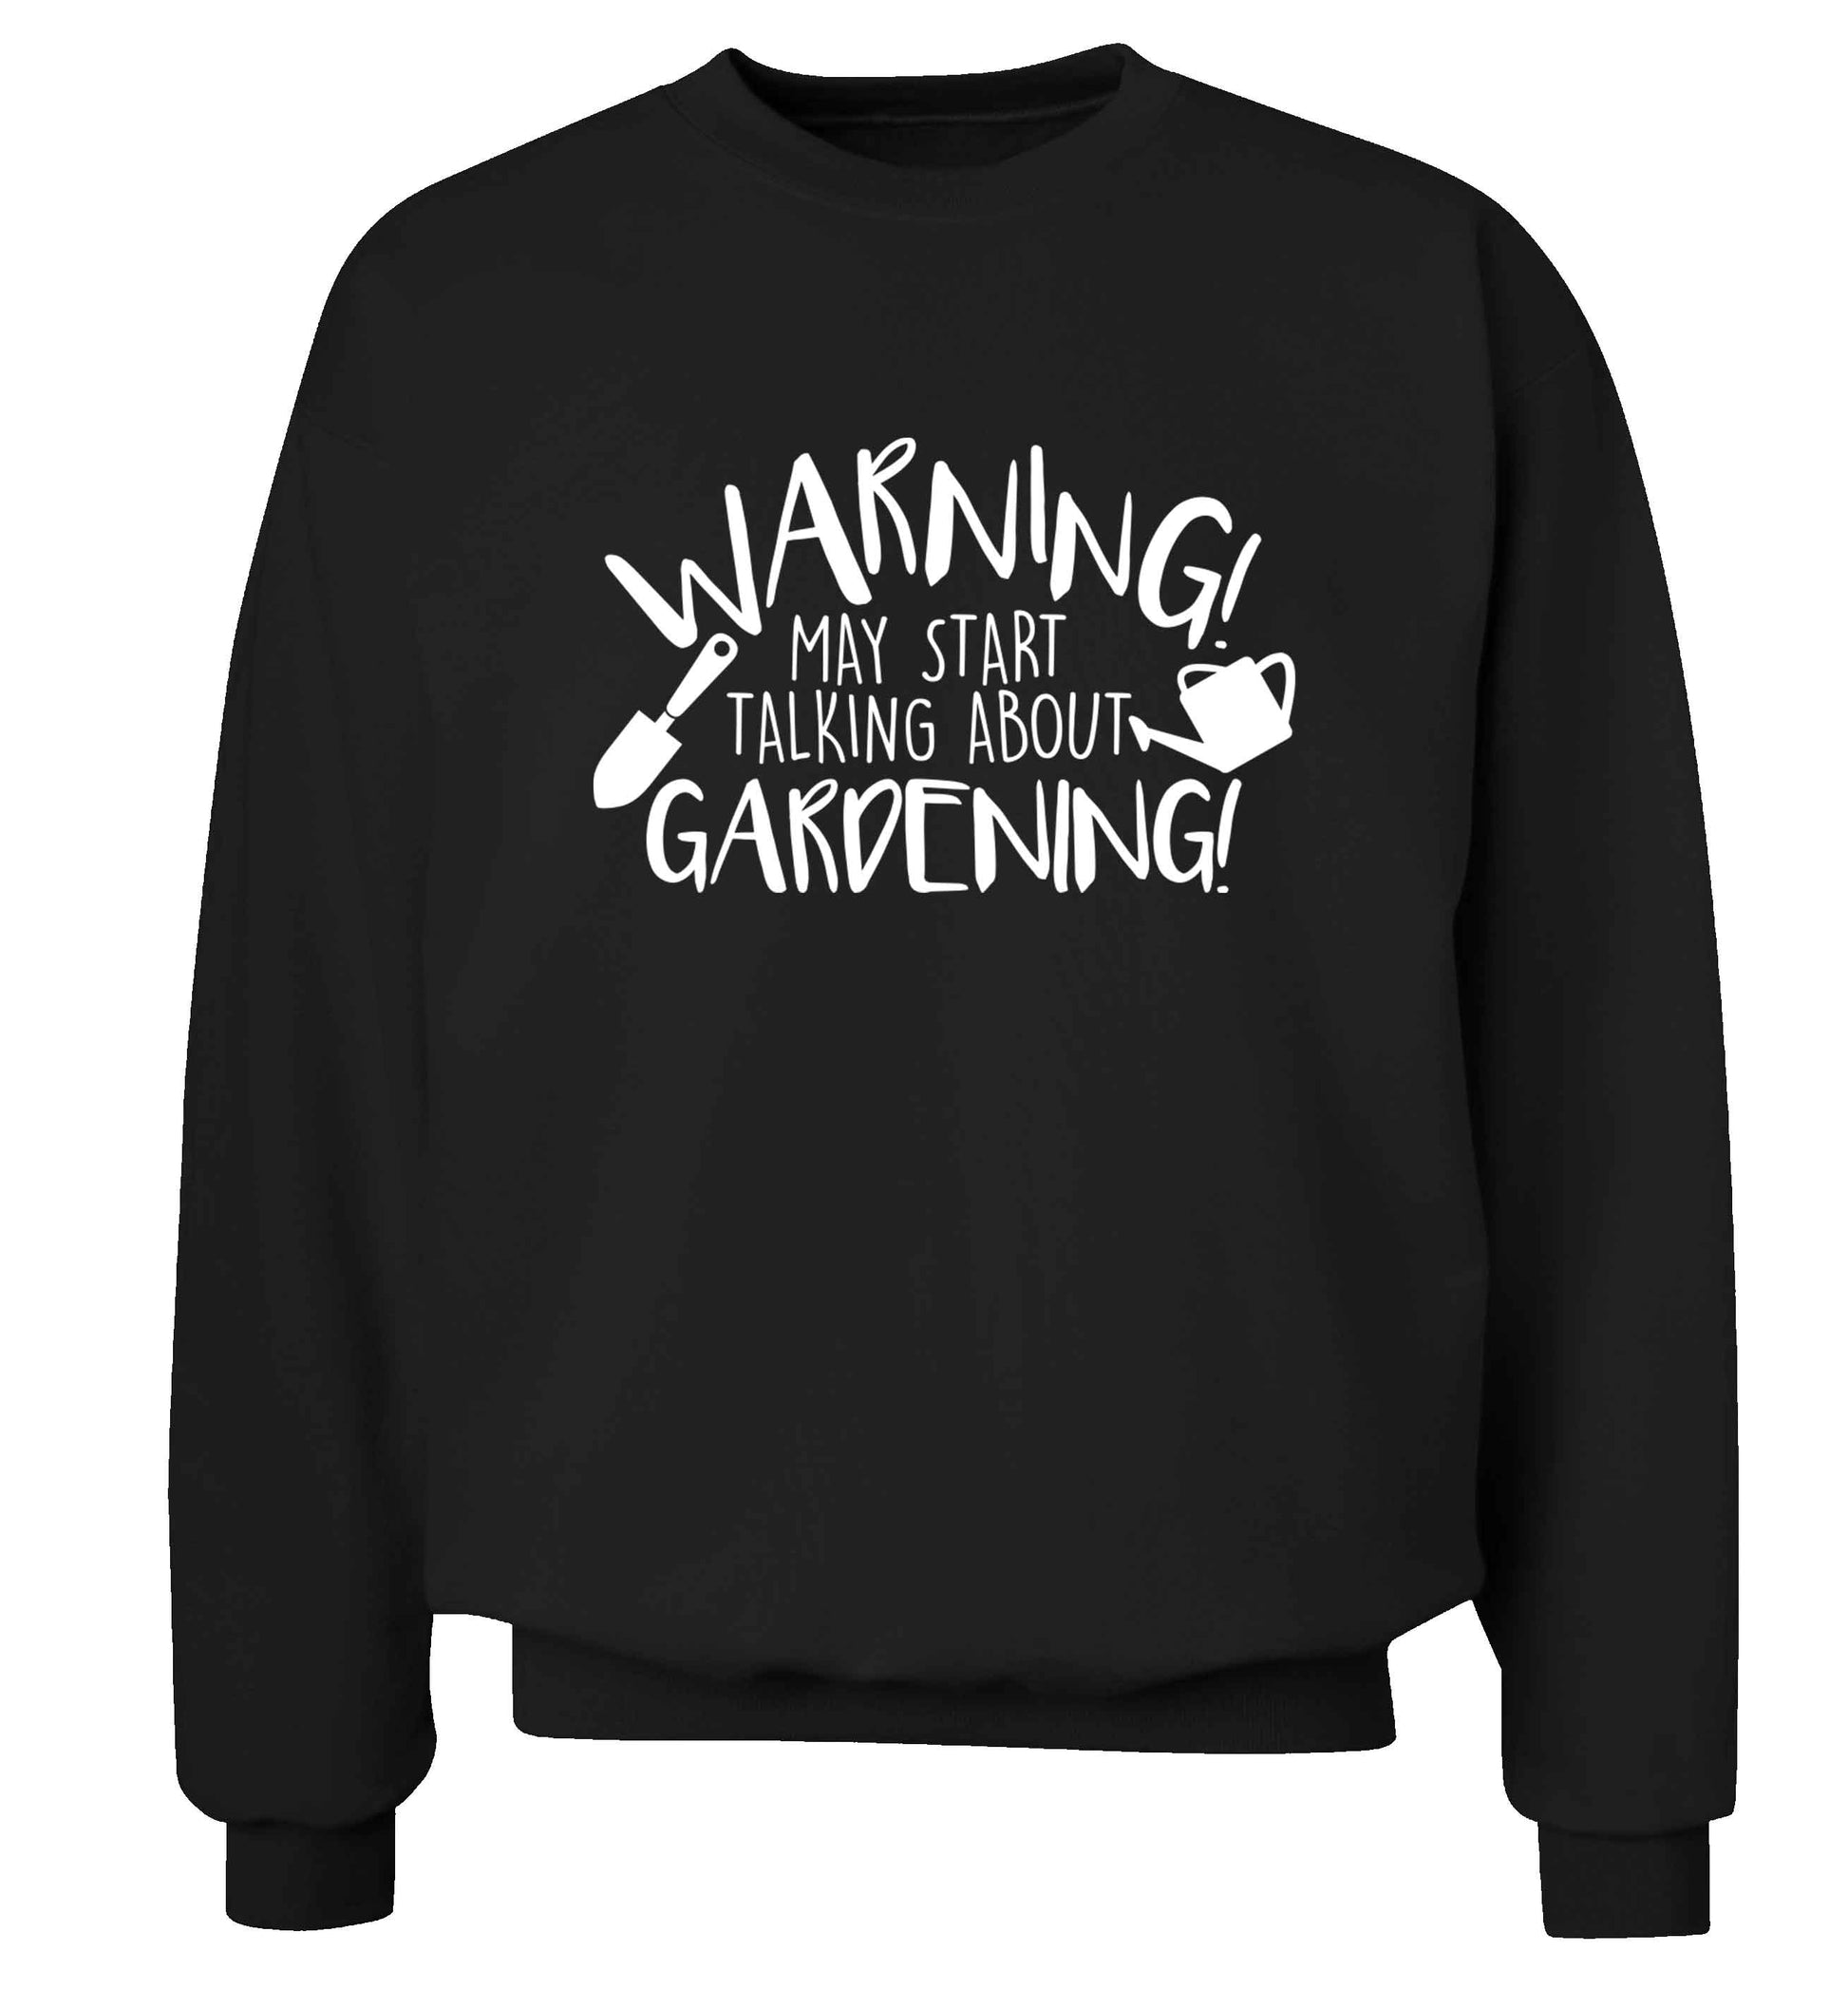 Warning may start talking about gardening Adult's unisex black Sweater 2XL